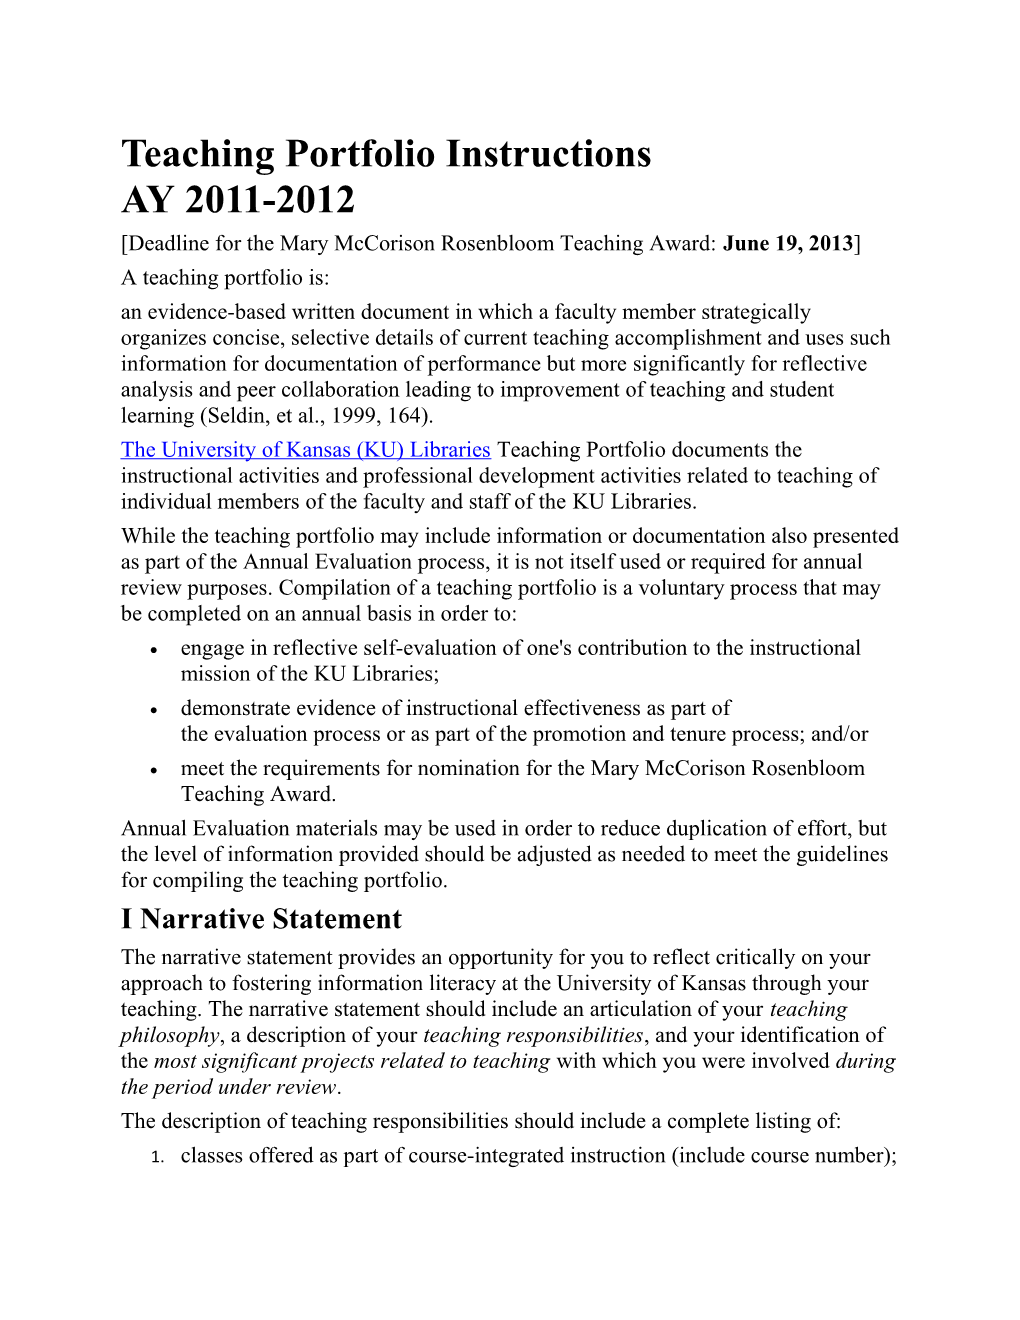 Teaching Portfolio Instructions AY2011-2012